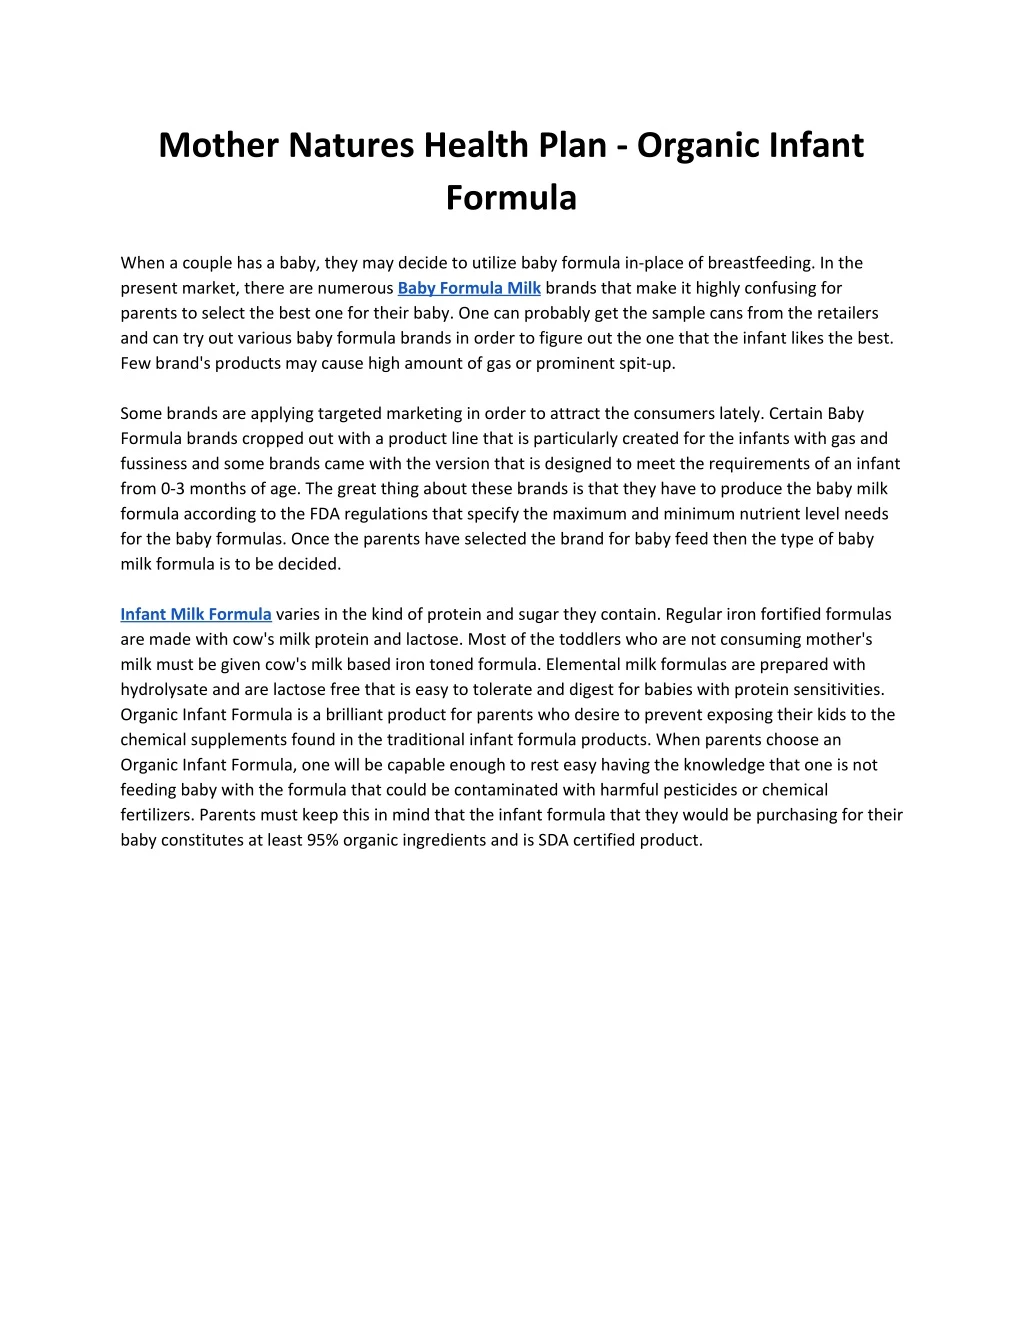 mother natures health plan organic infant formula